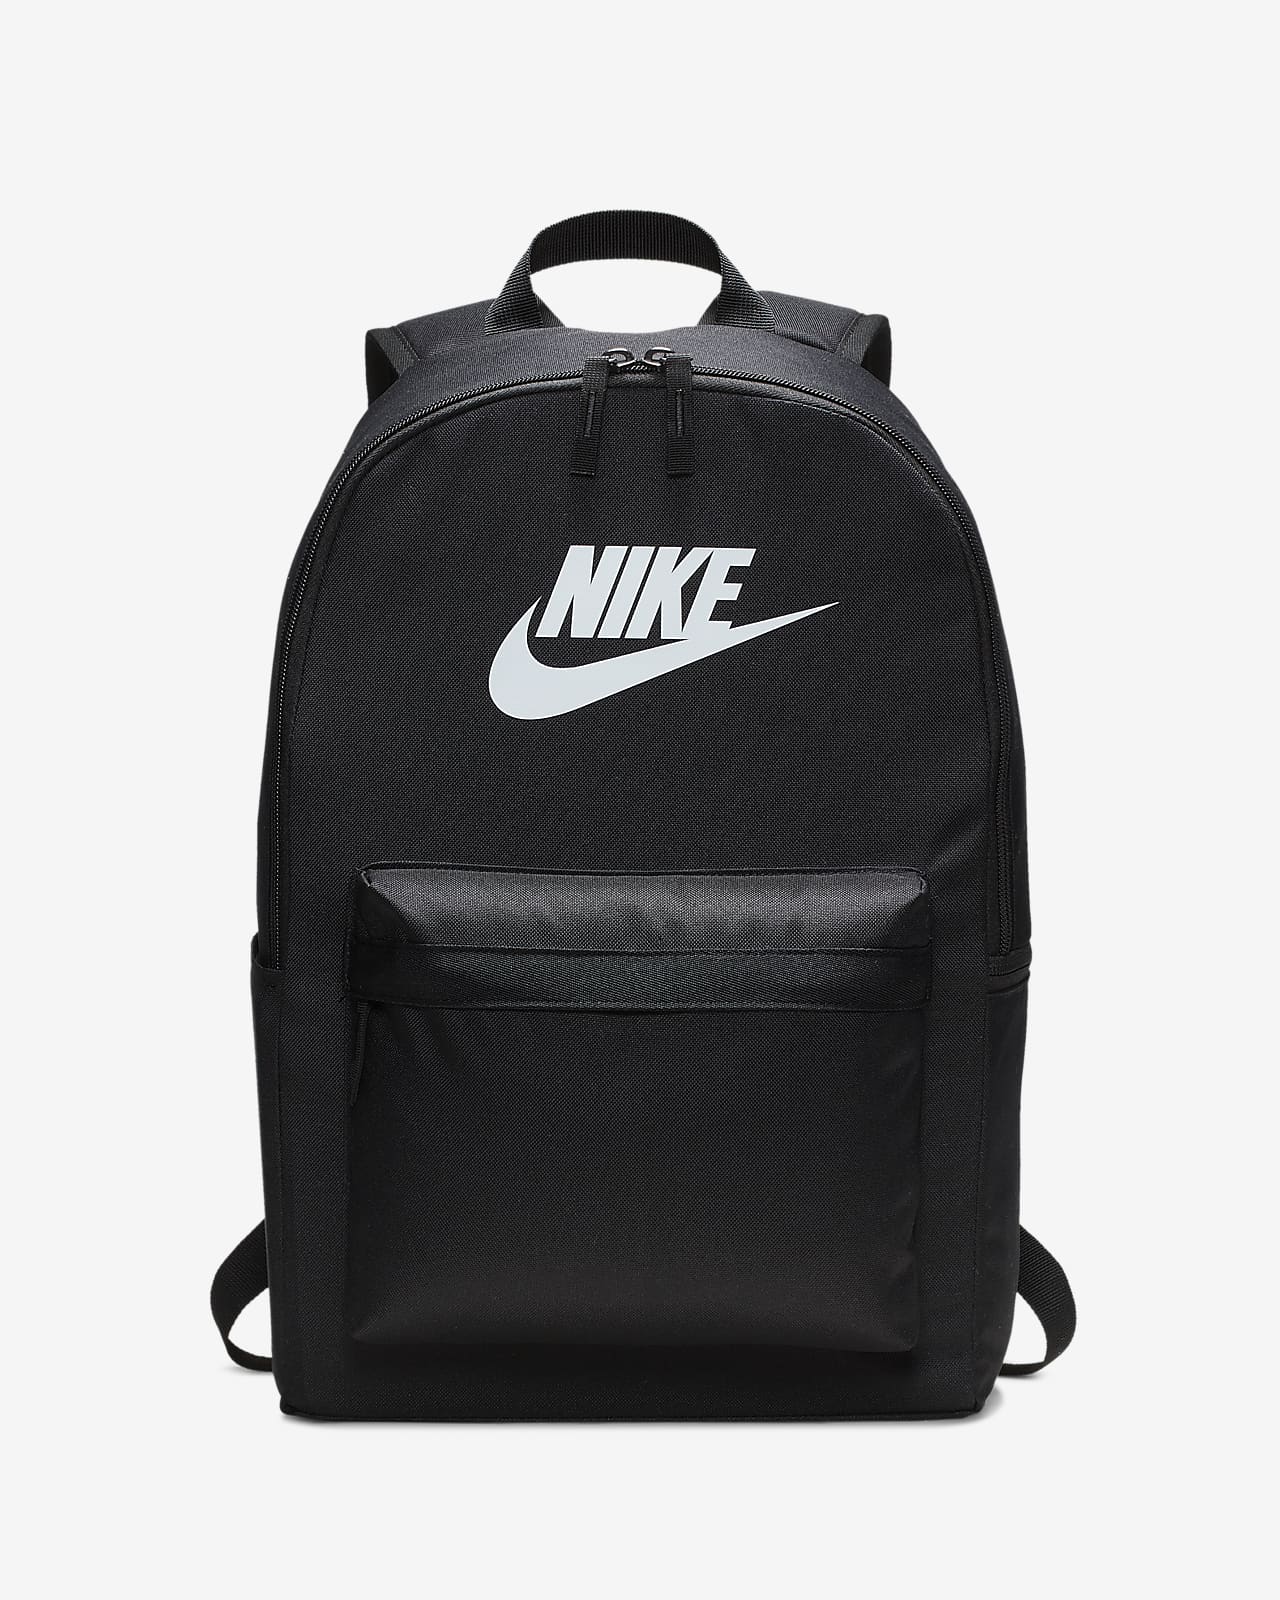 really cheap nike backpacks